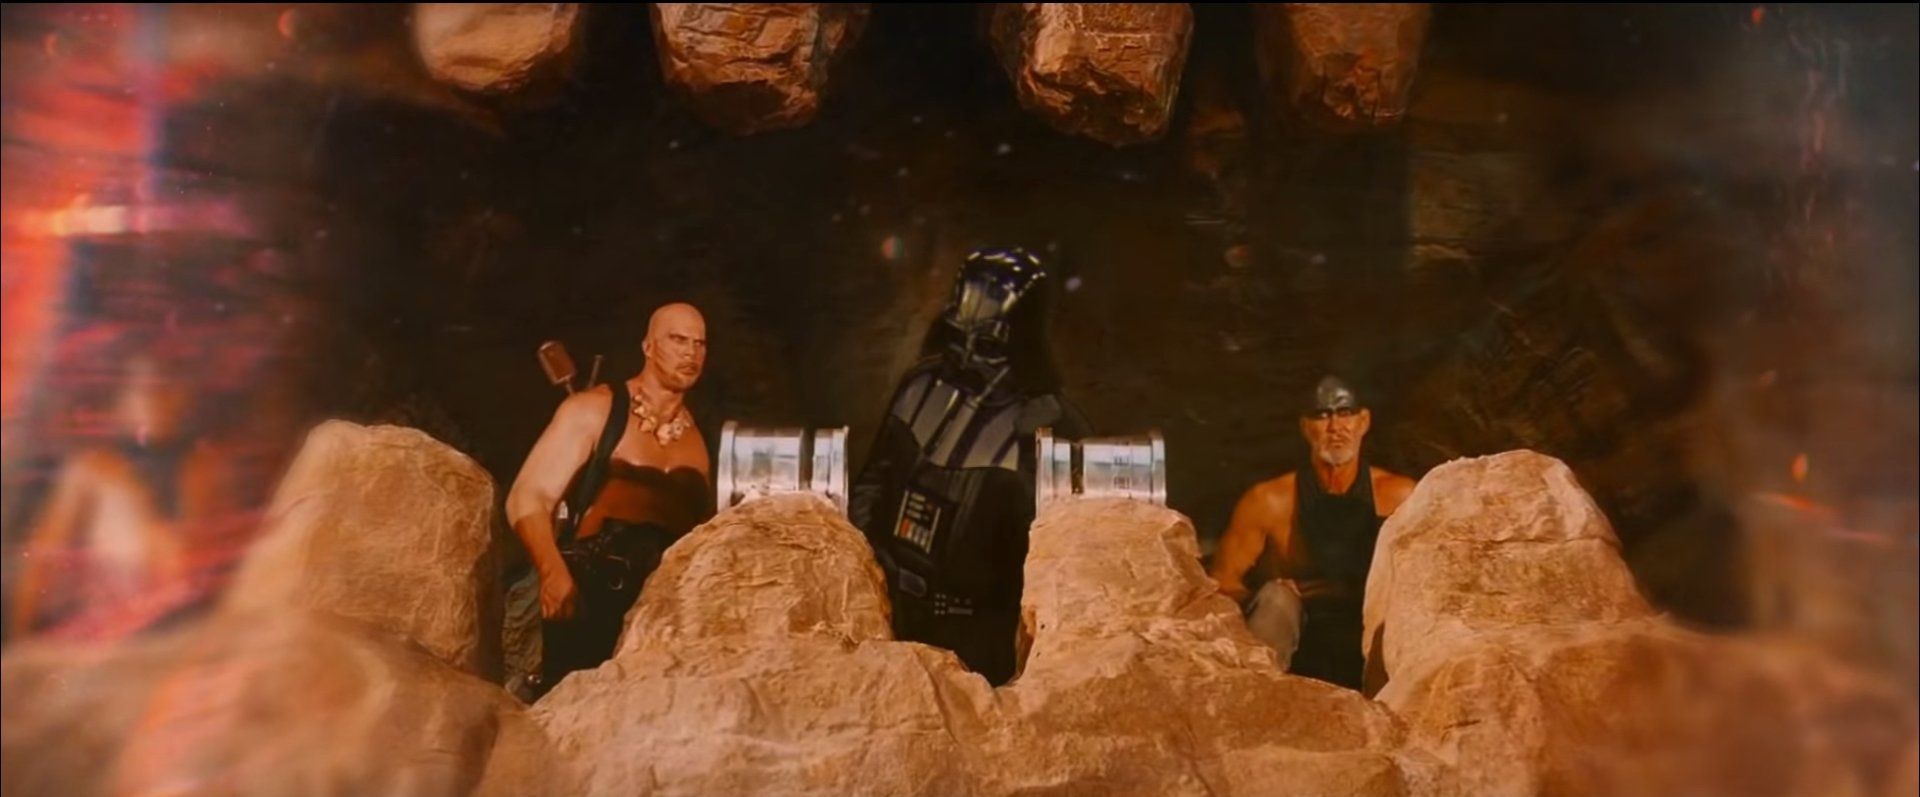 MASH-UP VIDÉO : Quand Star Wars rencontre Mad Max Fury Road